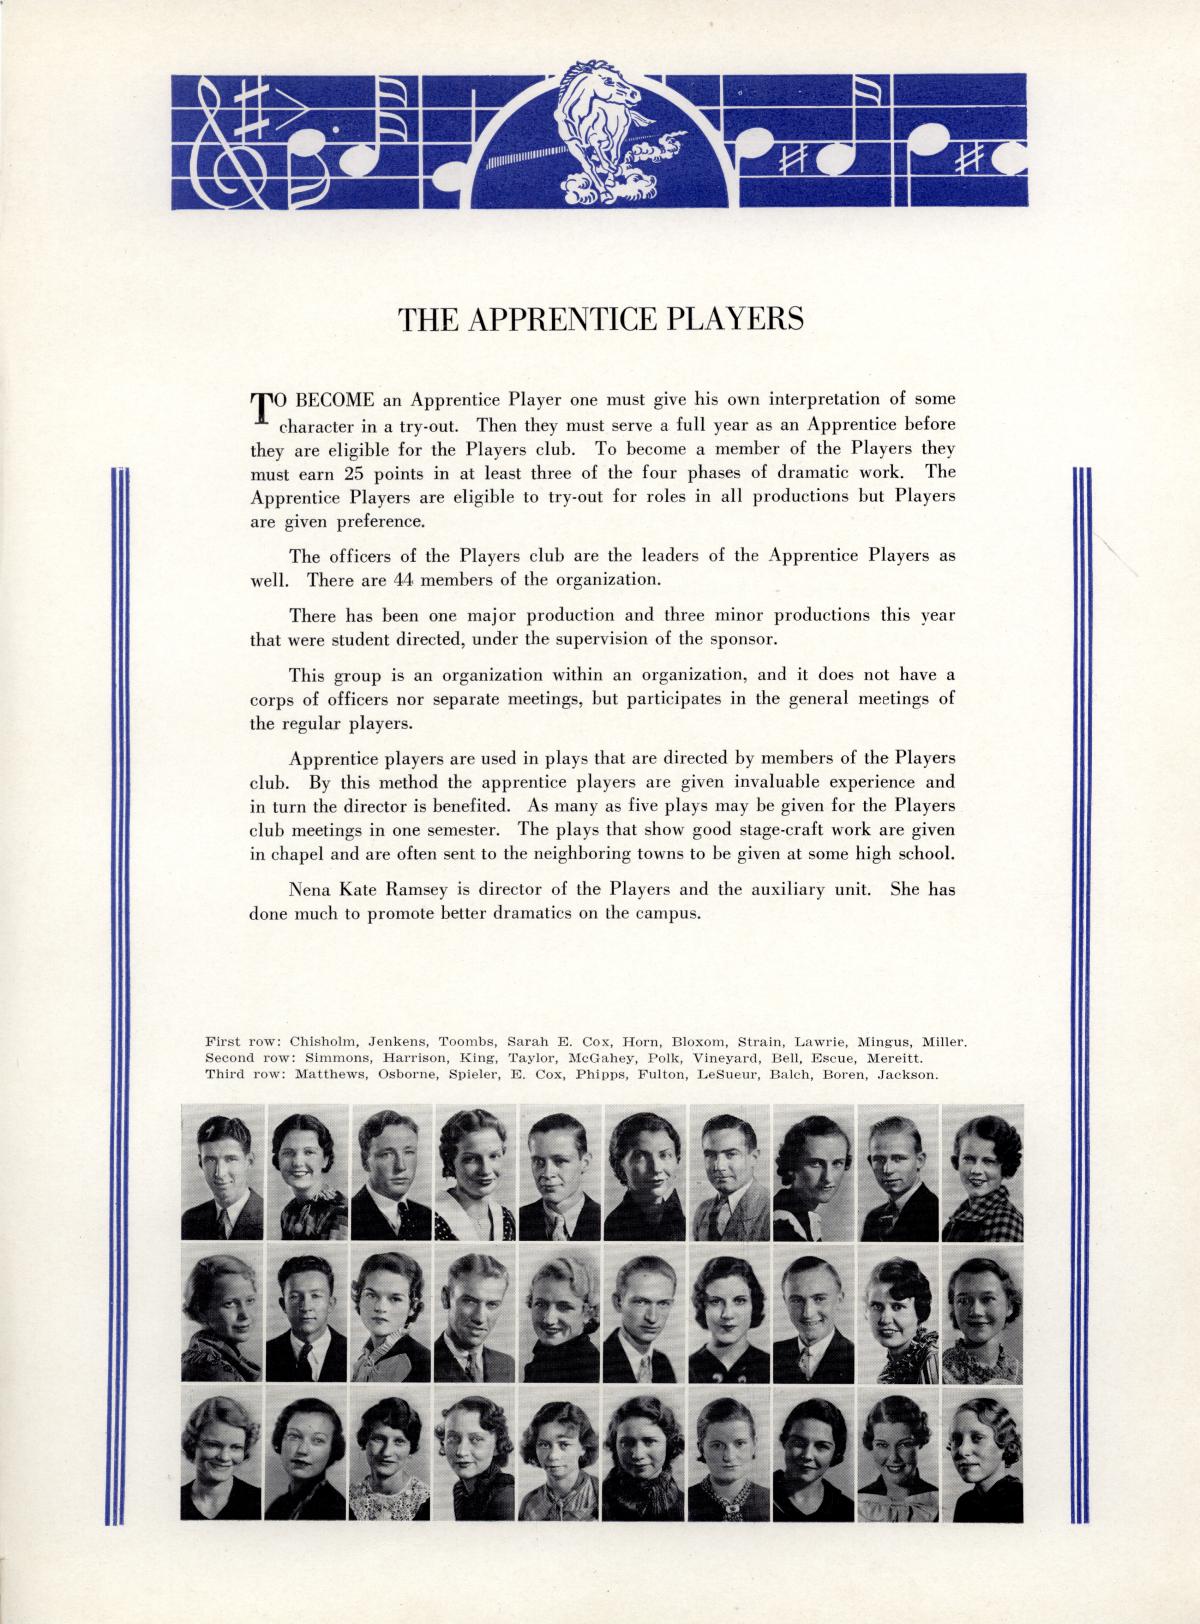 The Bronco, Yearbook of Hardin-Simmons University, 1935
                                                
                                                    161
                                                